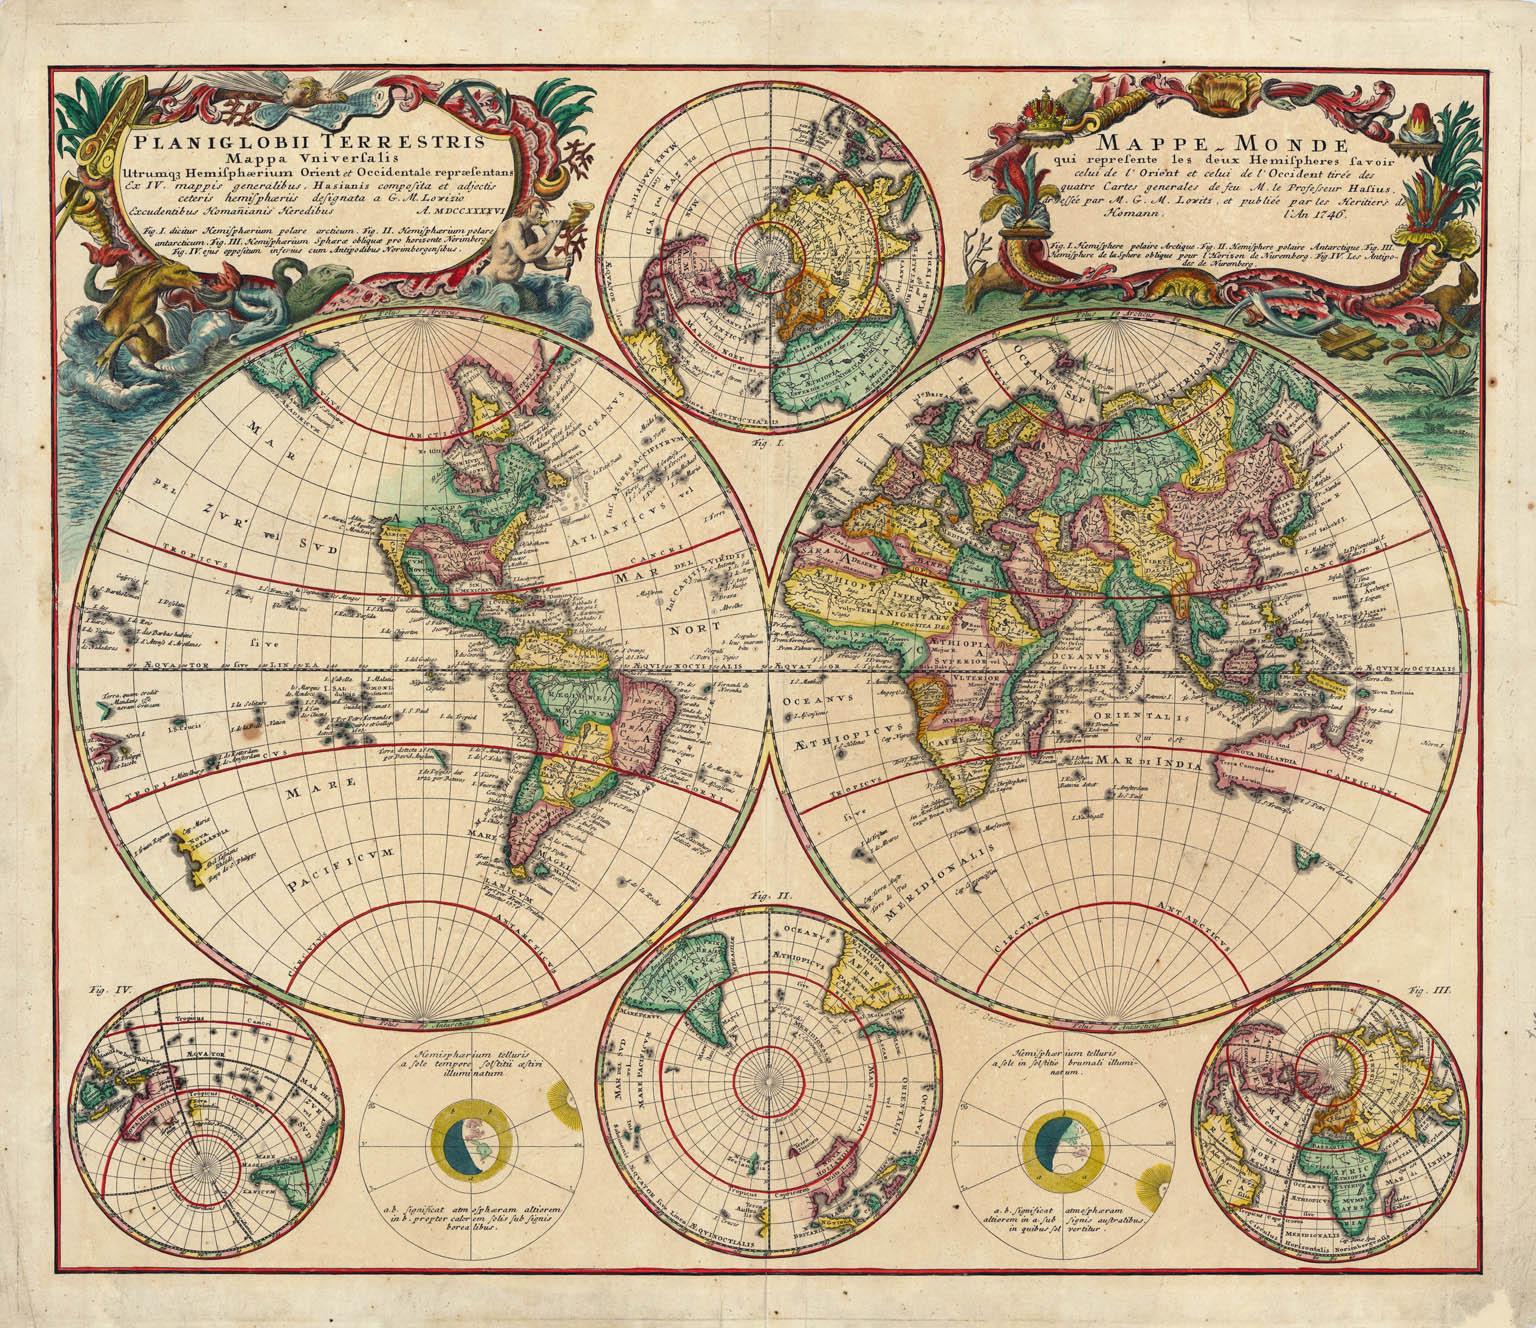 Planiglobii Terrestris Mappa Universalis / Mappe Monde